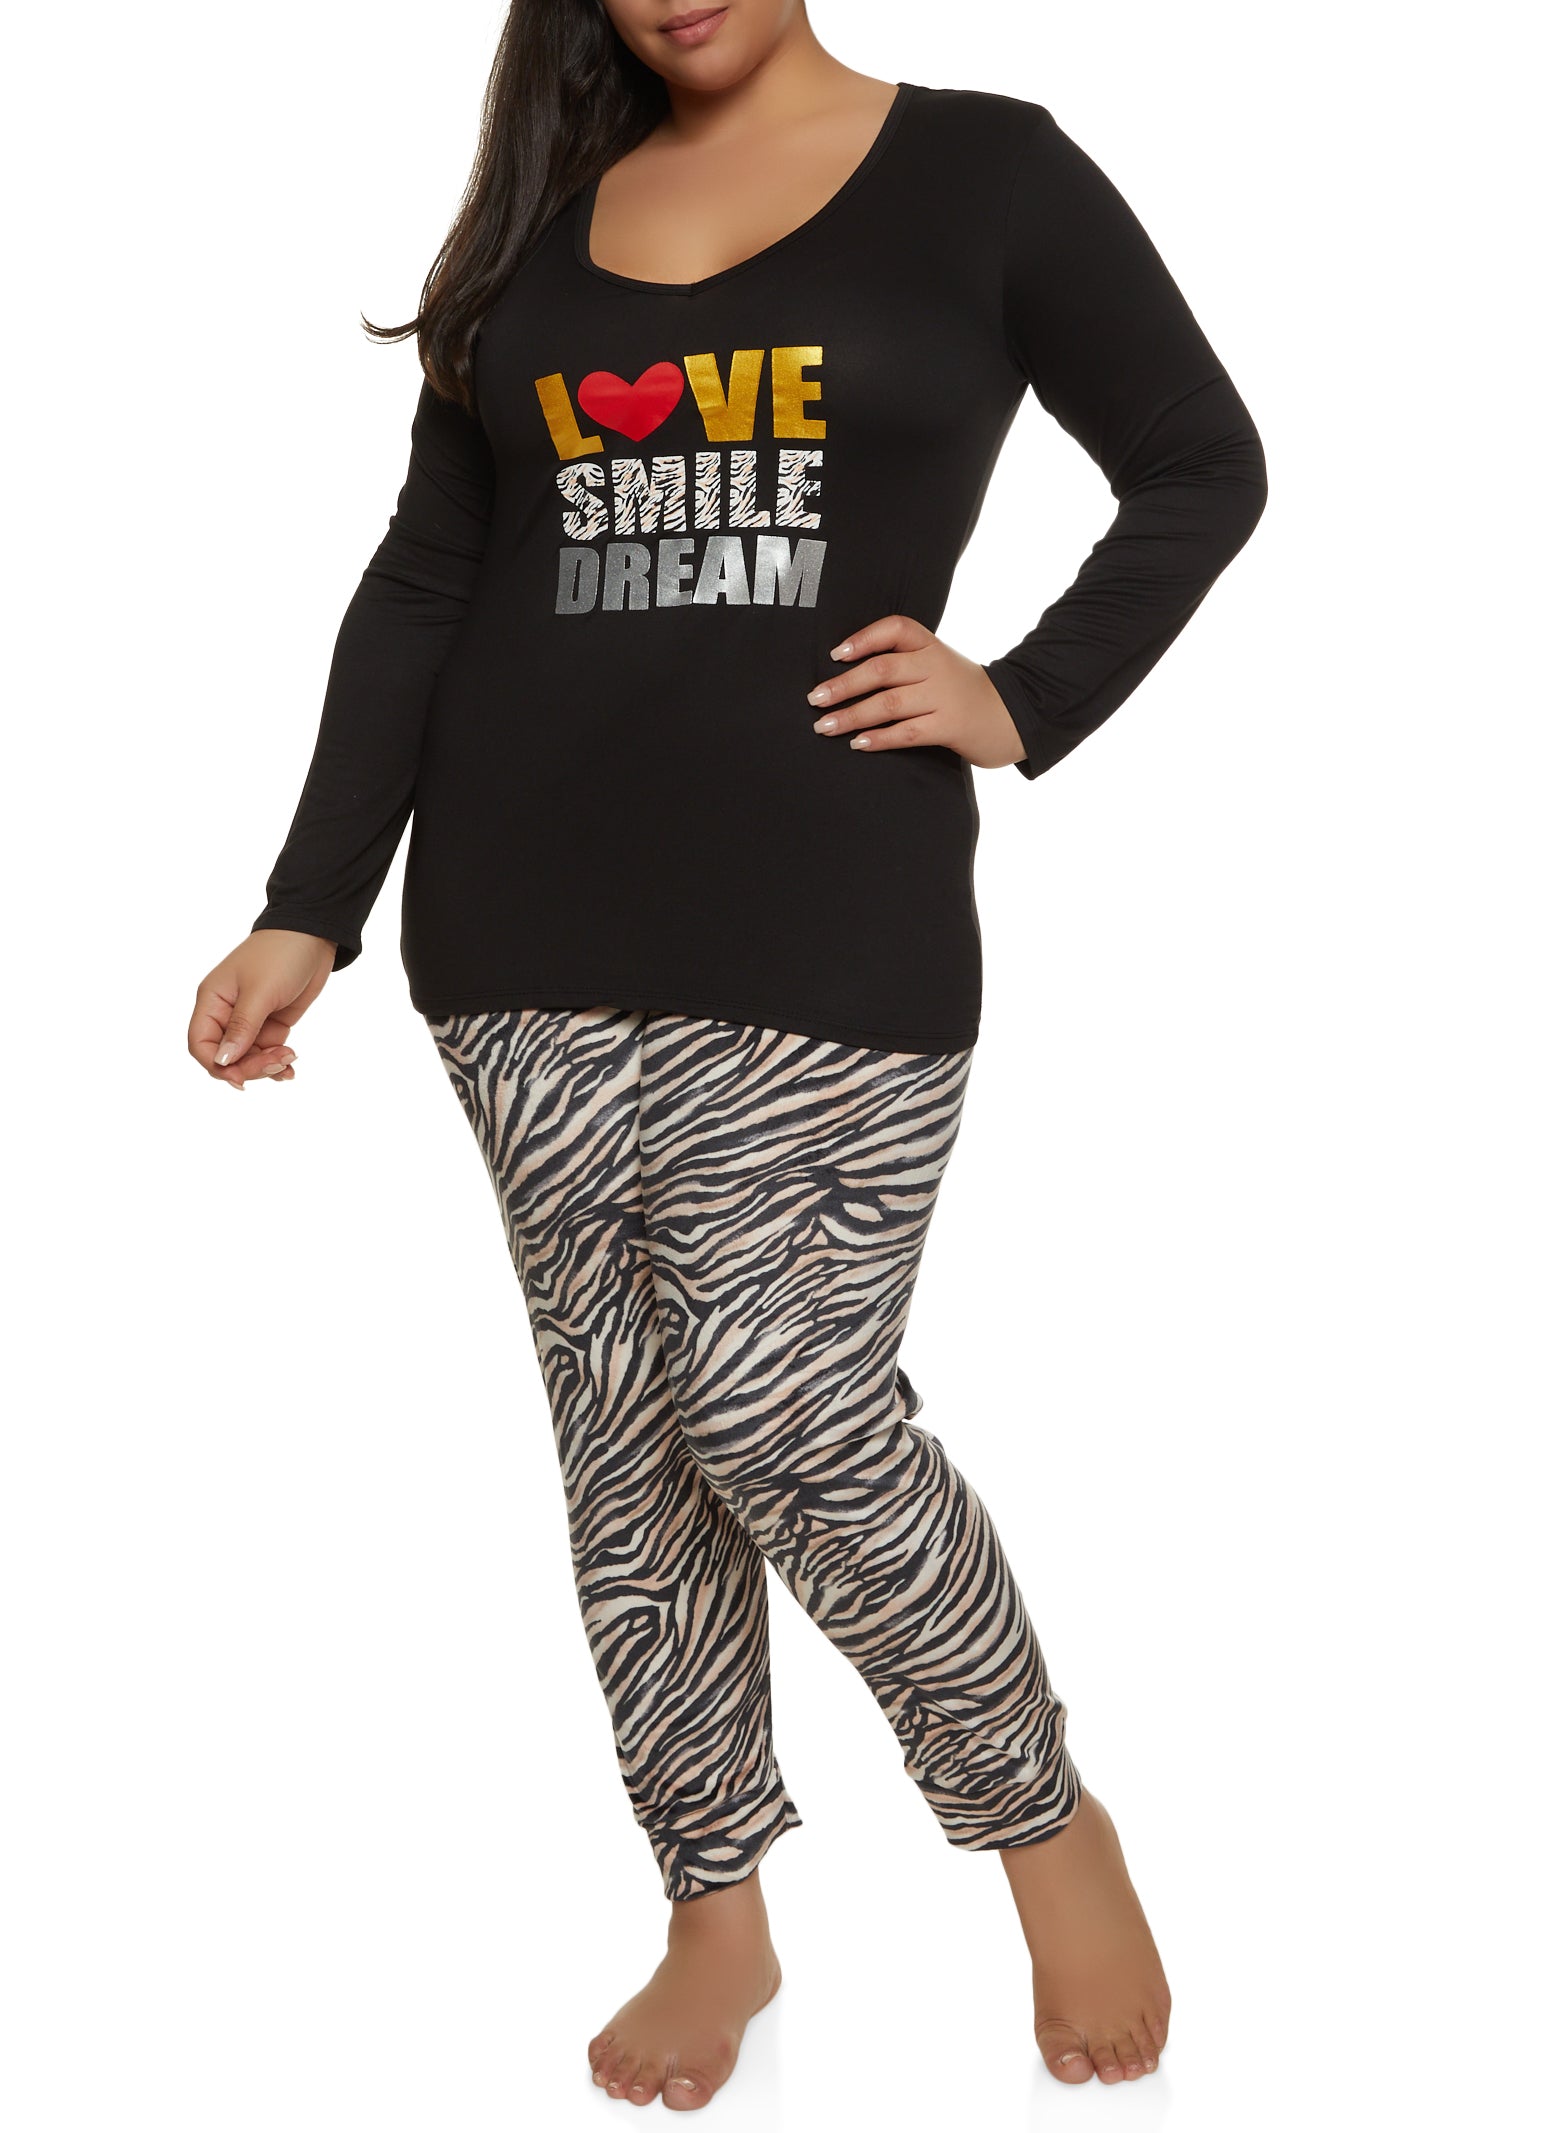 Rainbow Shops Womens Plus Size I Love You Sleep Graphic Pajama Top